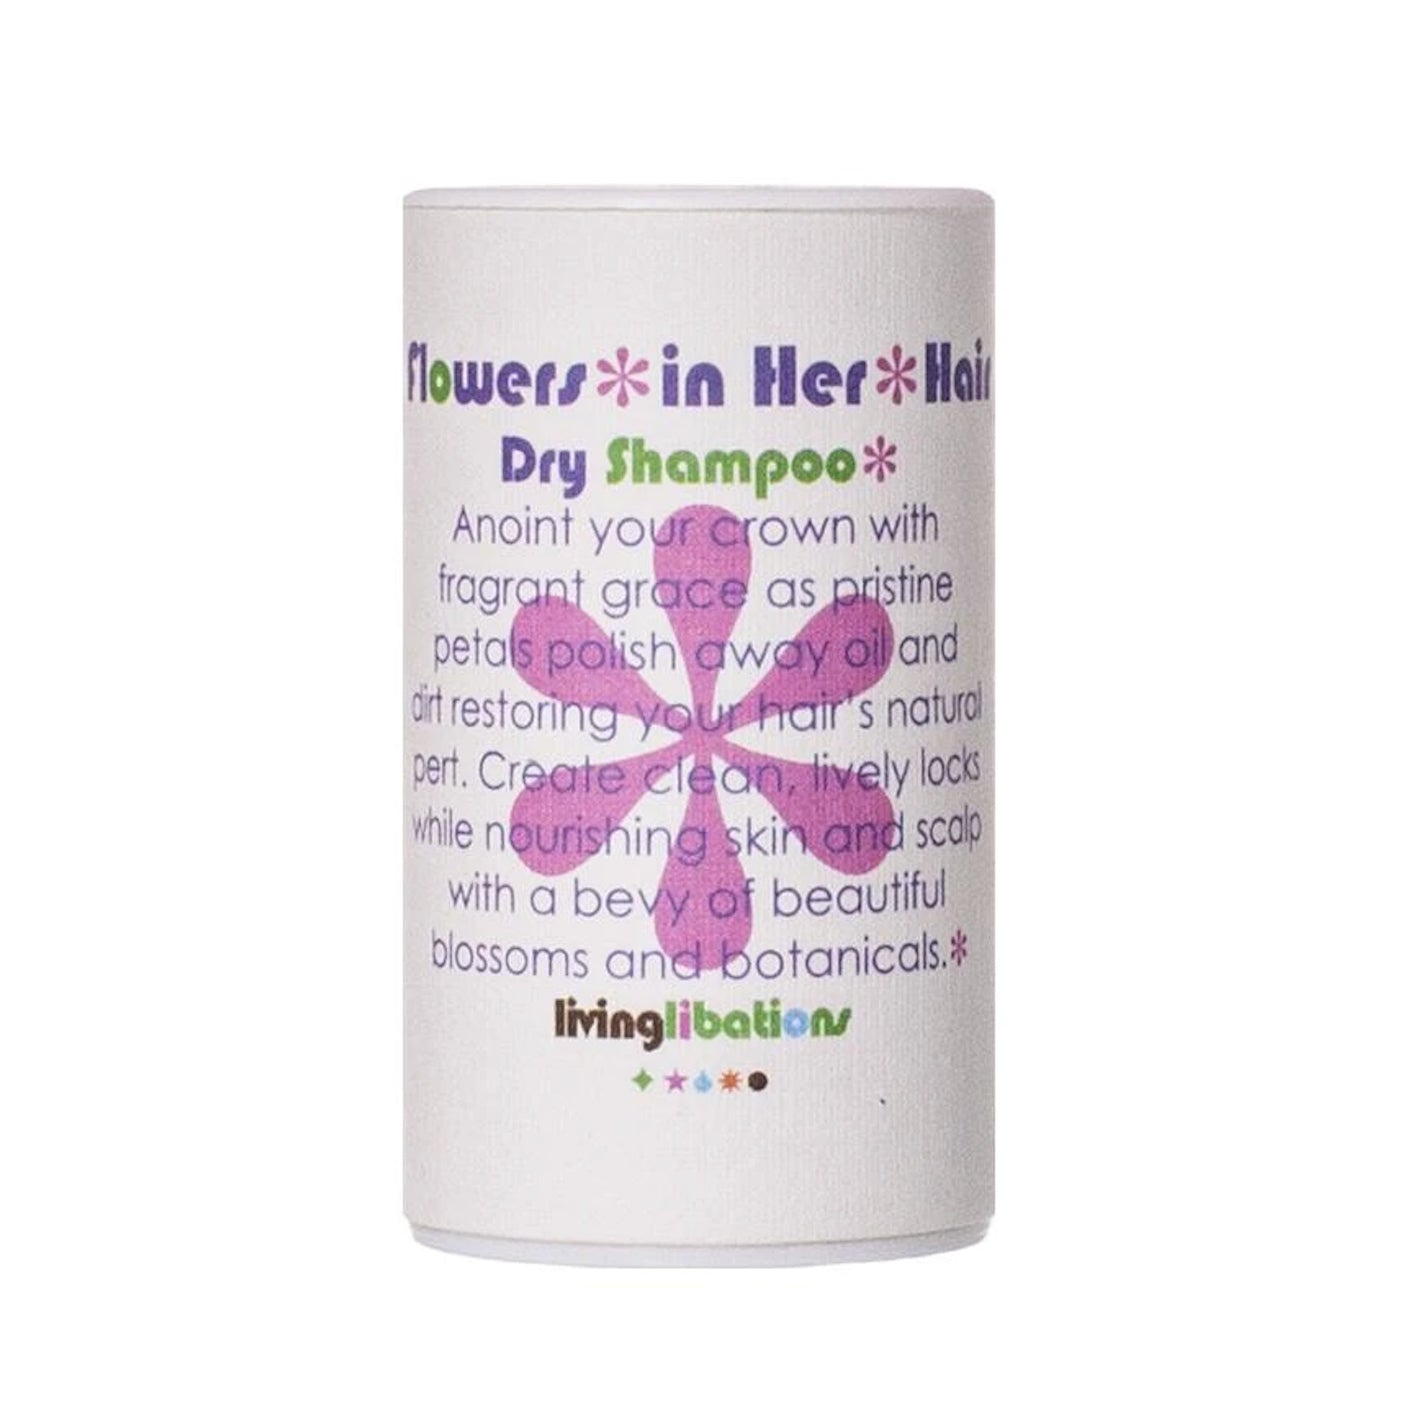 dry shampoo - flowers in her hair 30ml